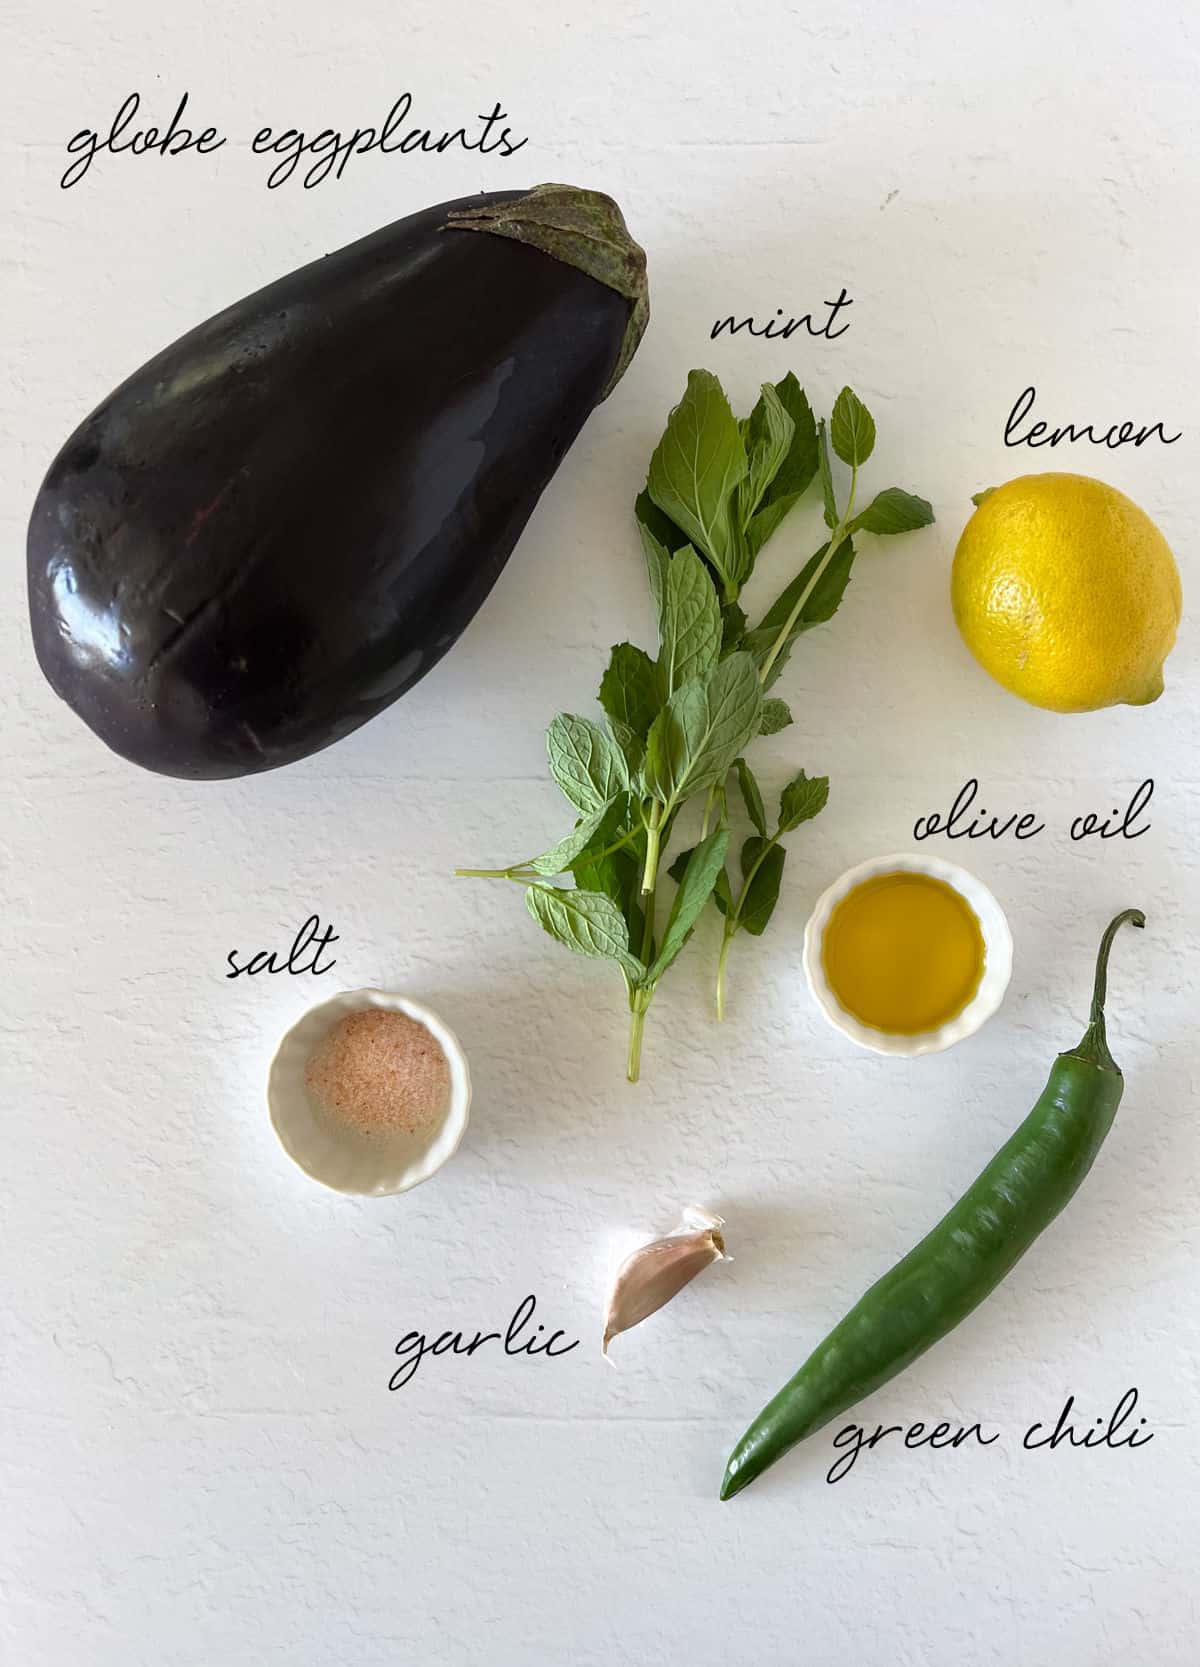 a globe eggplant, lemon, mint leaves, salt, green chili, garlic clove and olive oil laid out